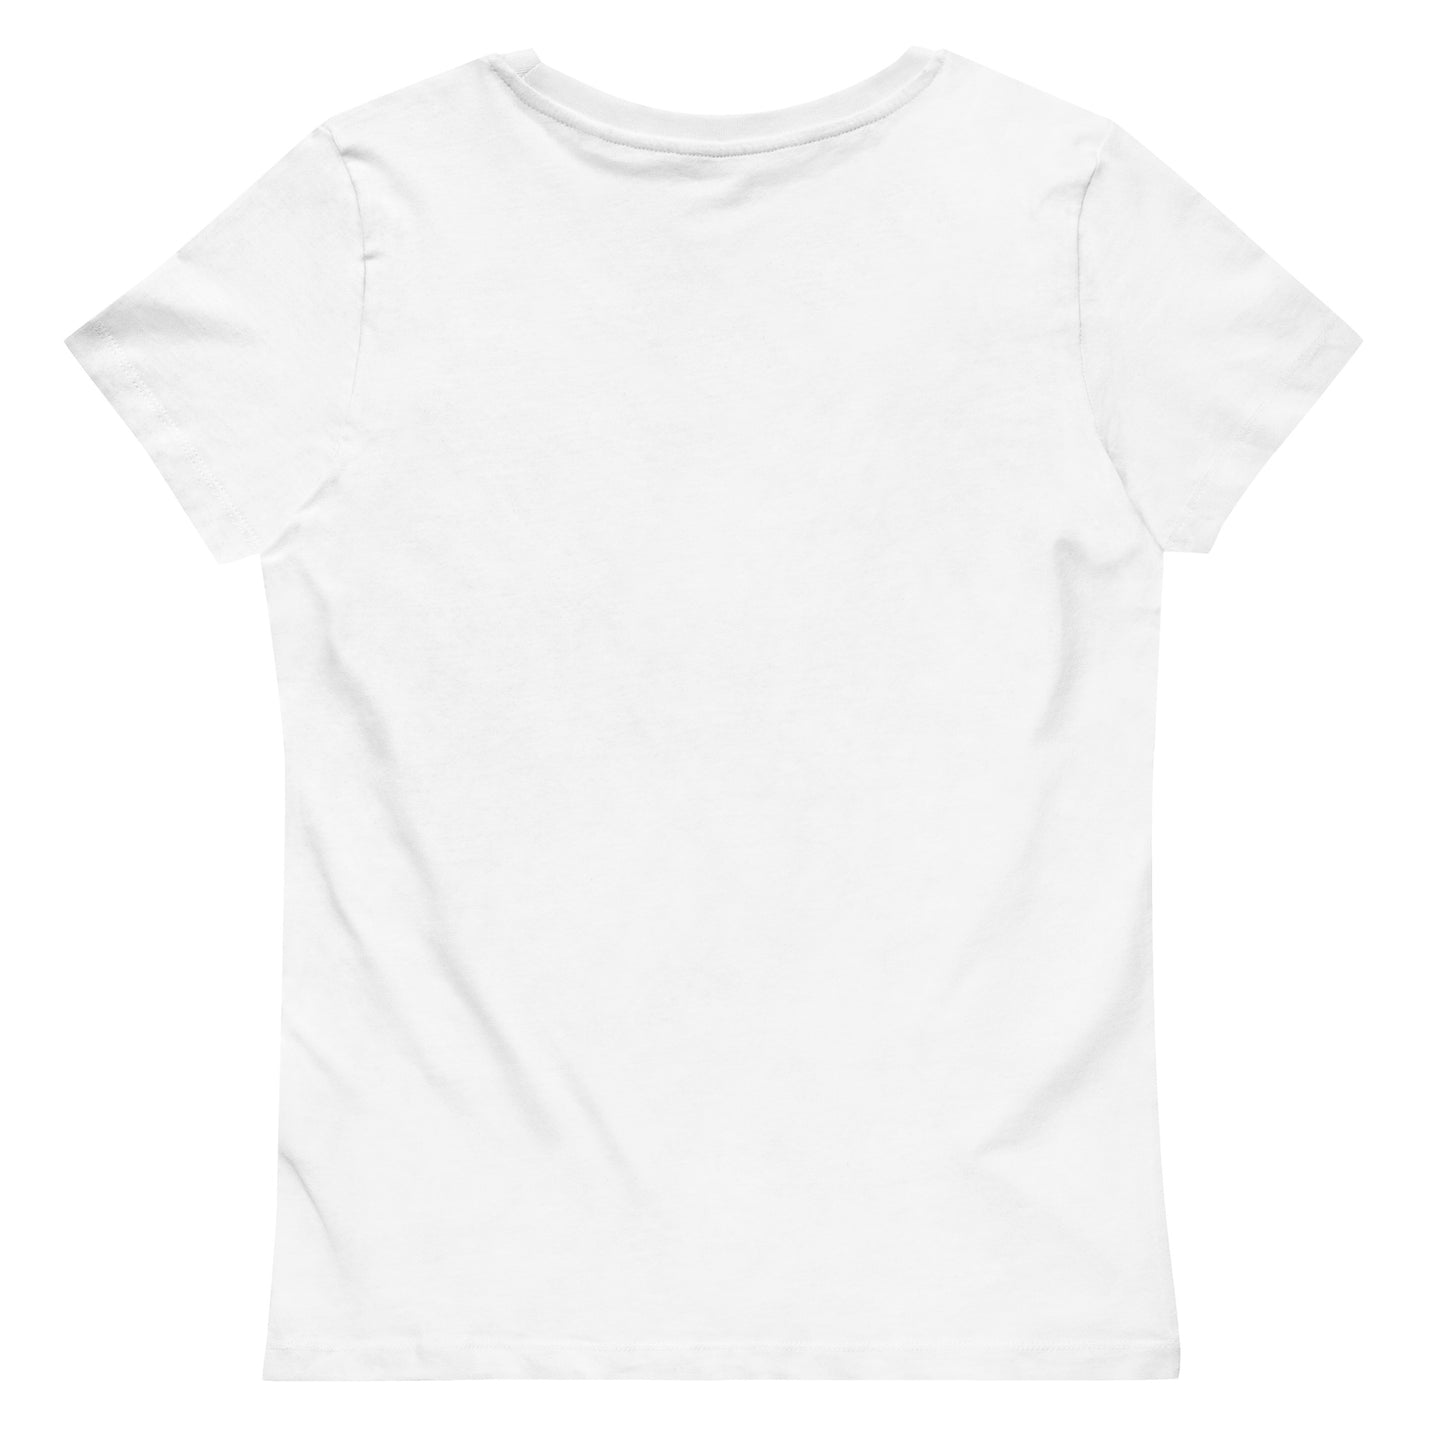 T-shirt moulant Menkrav Initiate blanc